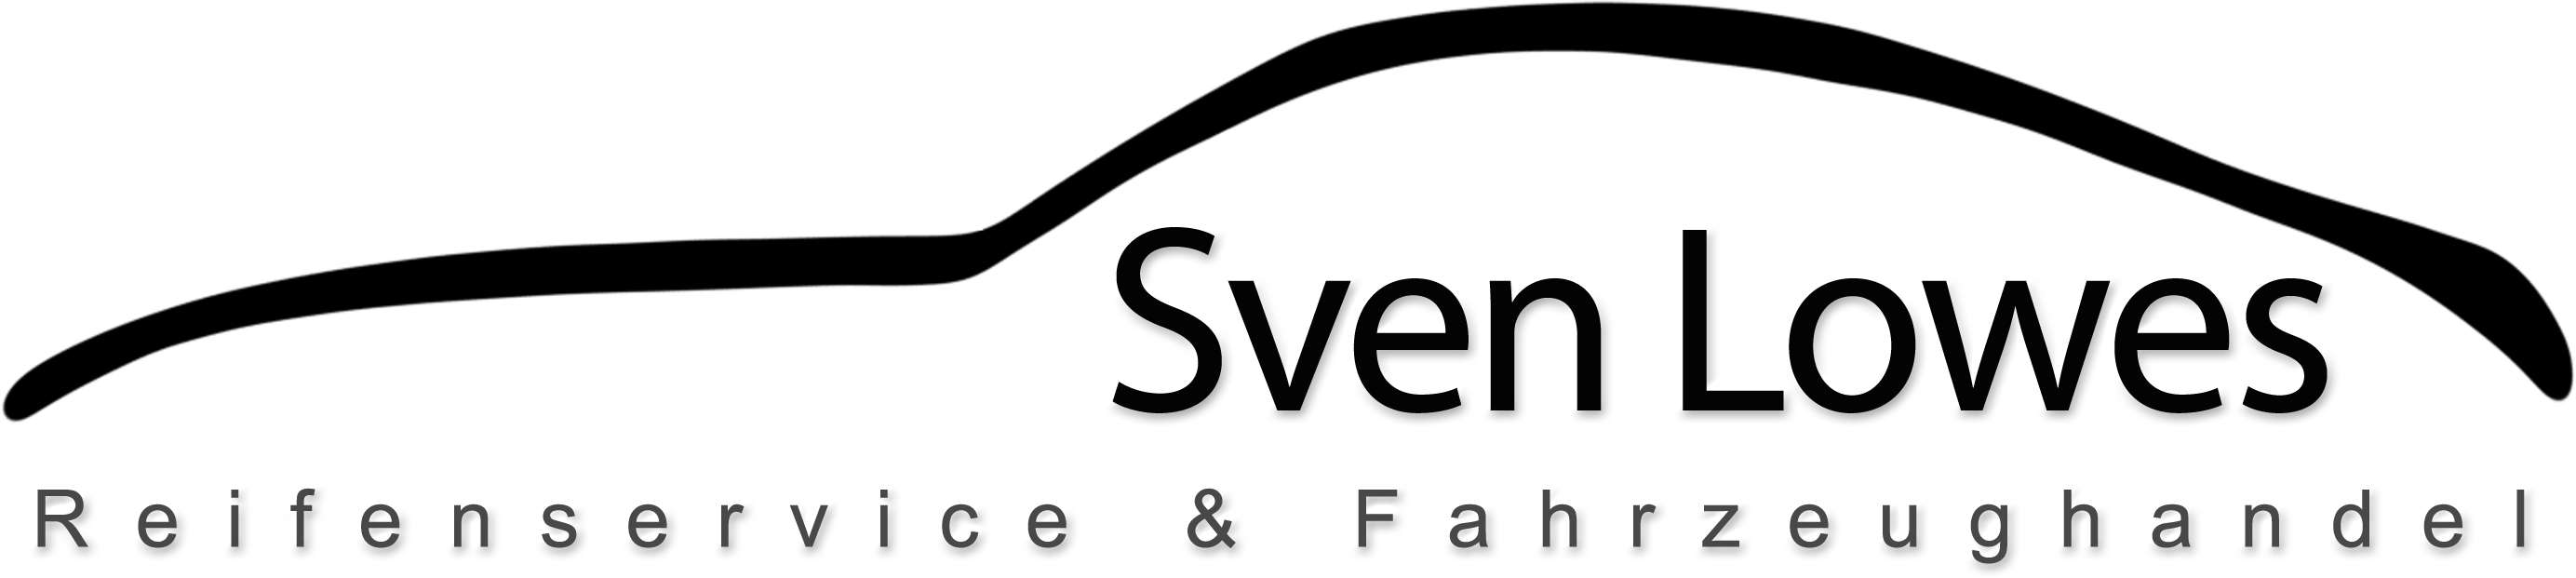 Sven Lowes - Reifenservice & Fahrzeughandel